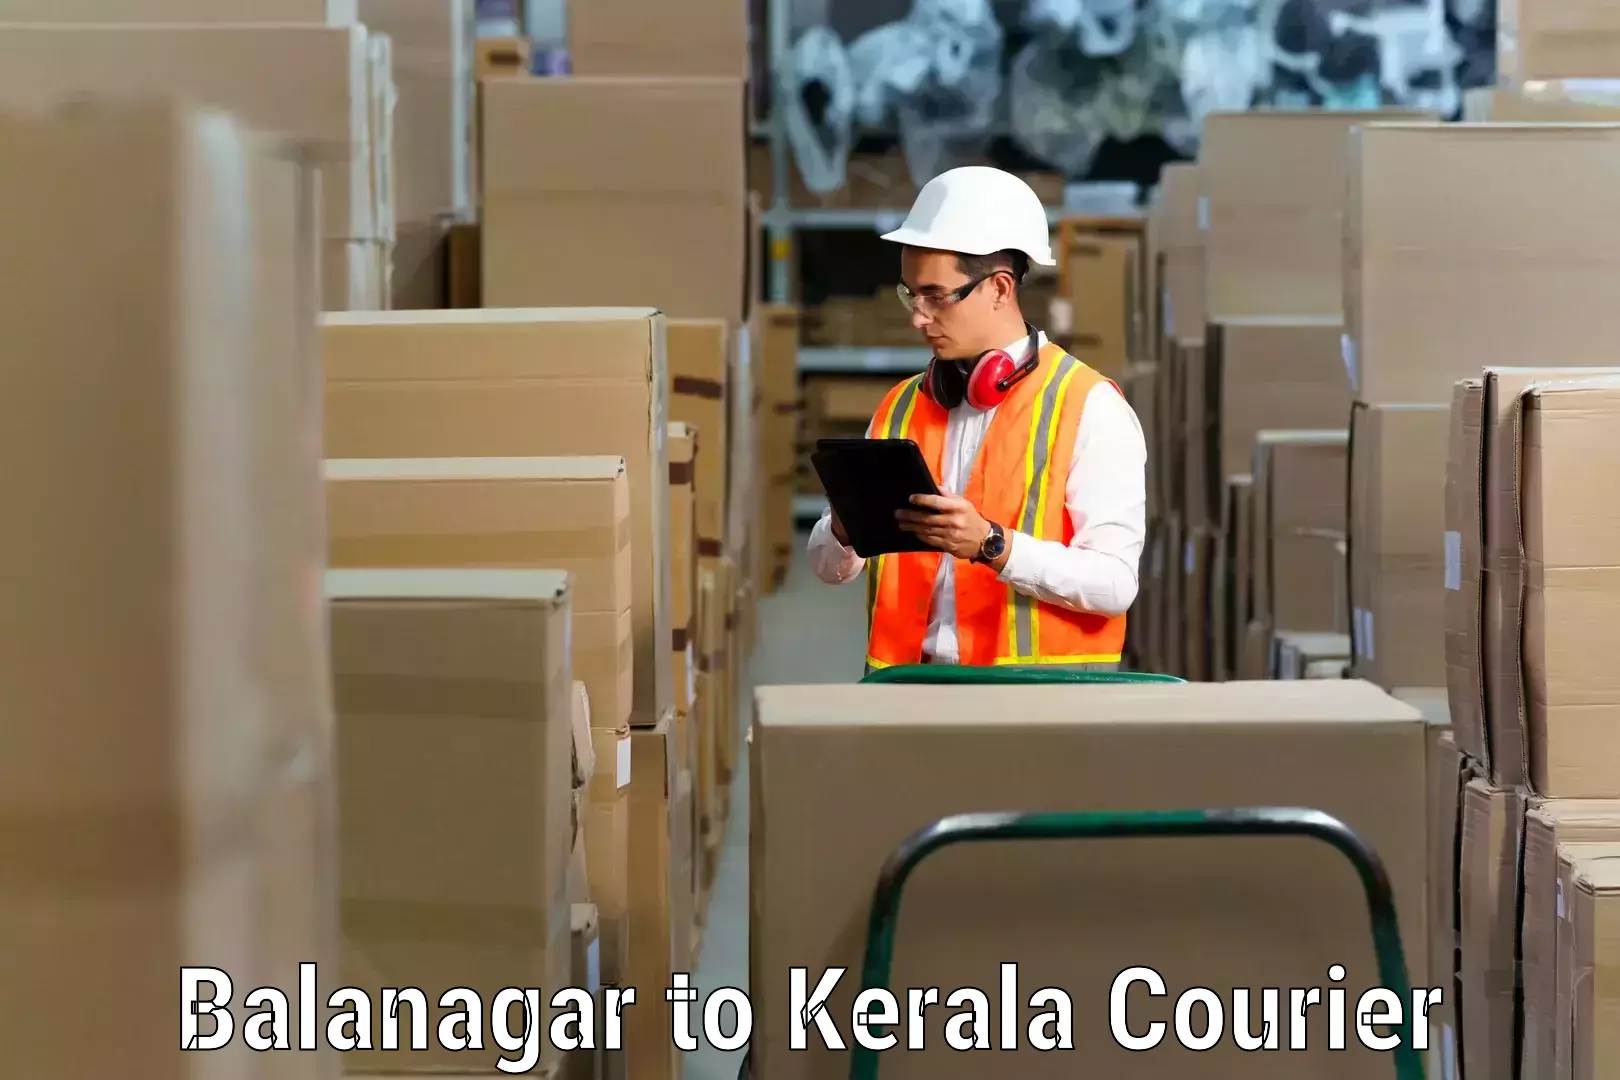 Furniture moving experts Balanagar to Kerala